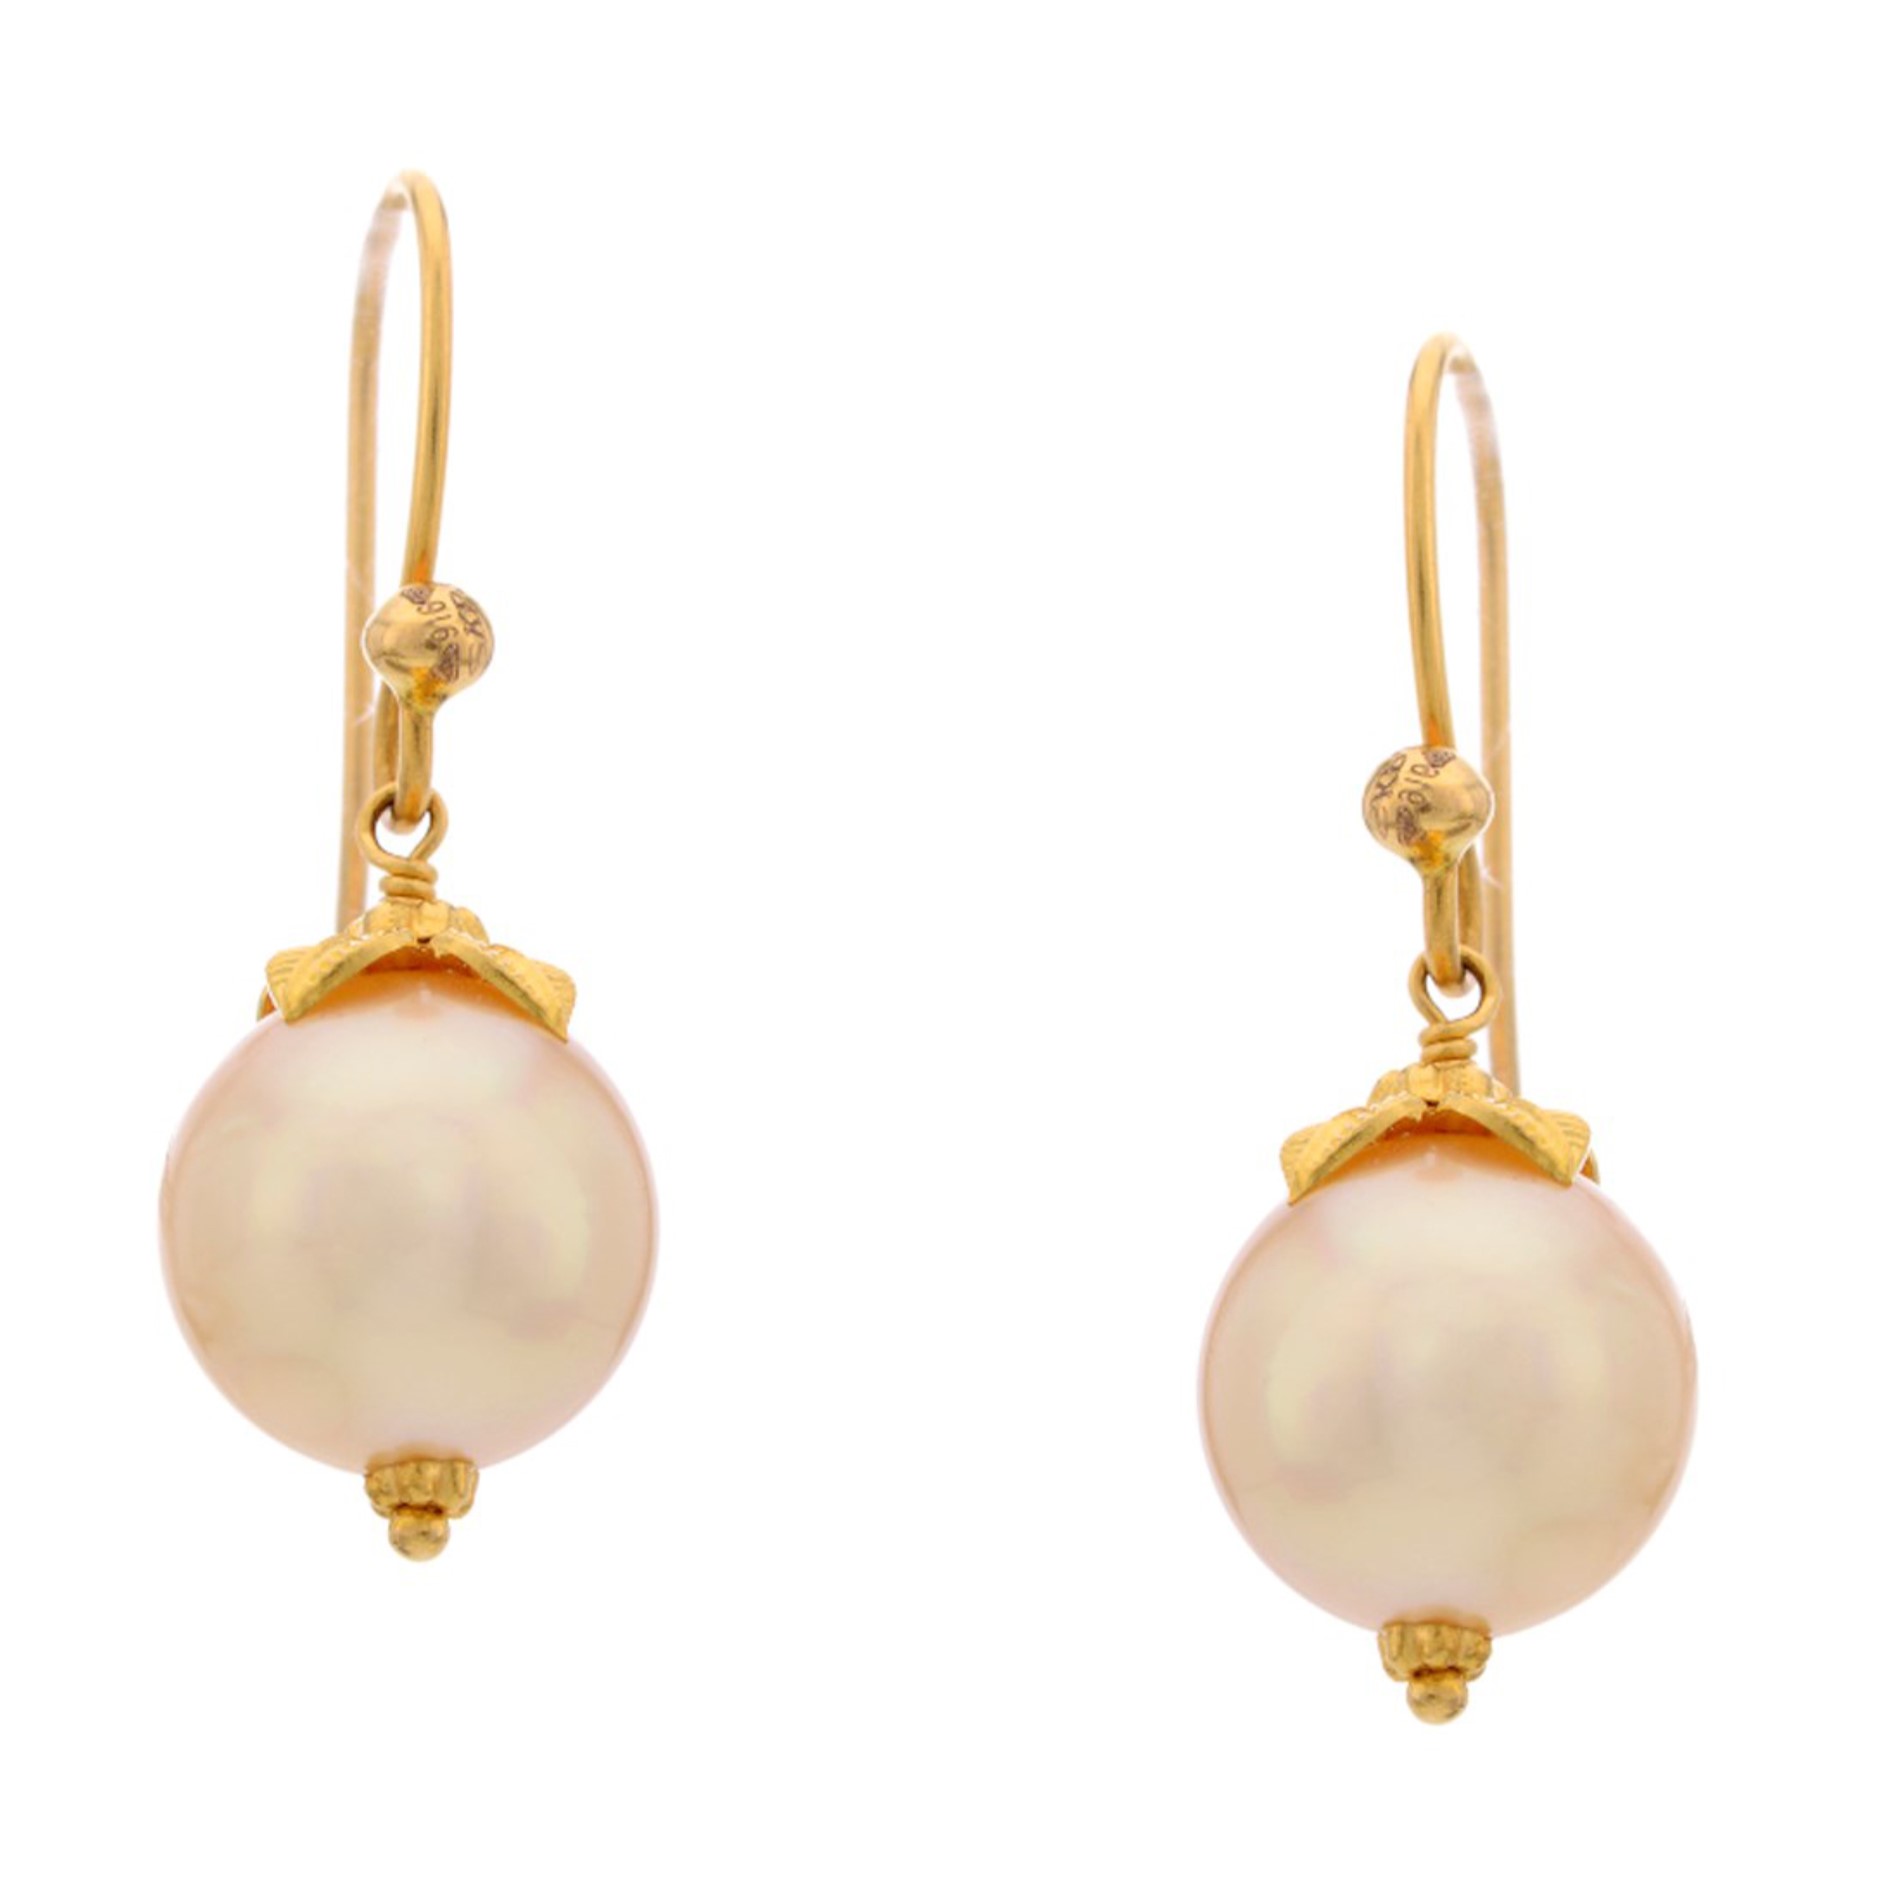 Buy round shaped Pearl Hanging Earrings online